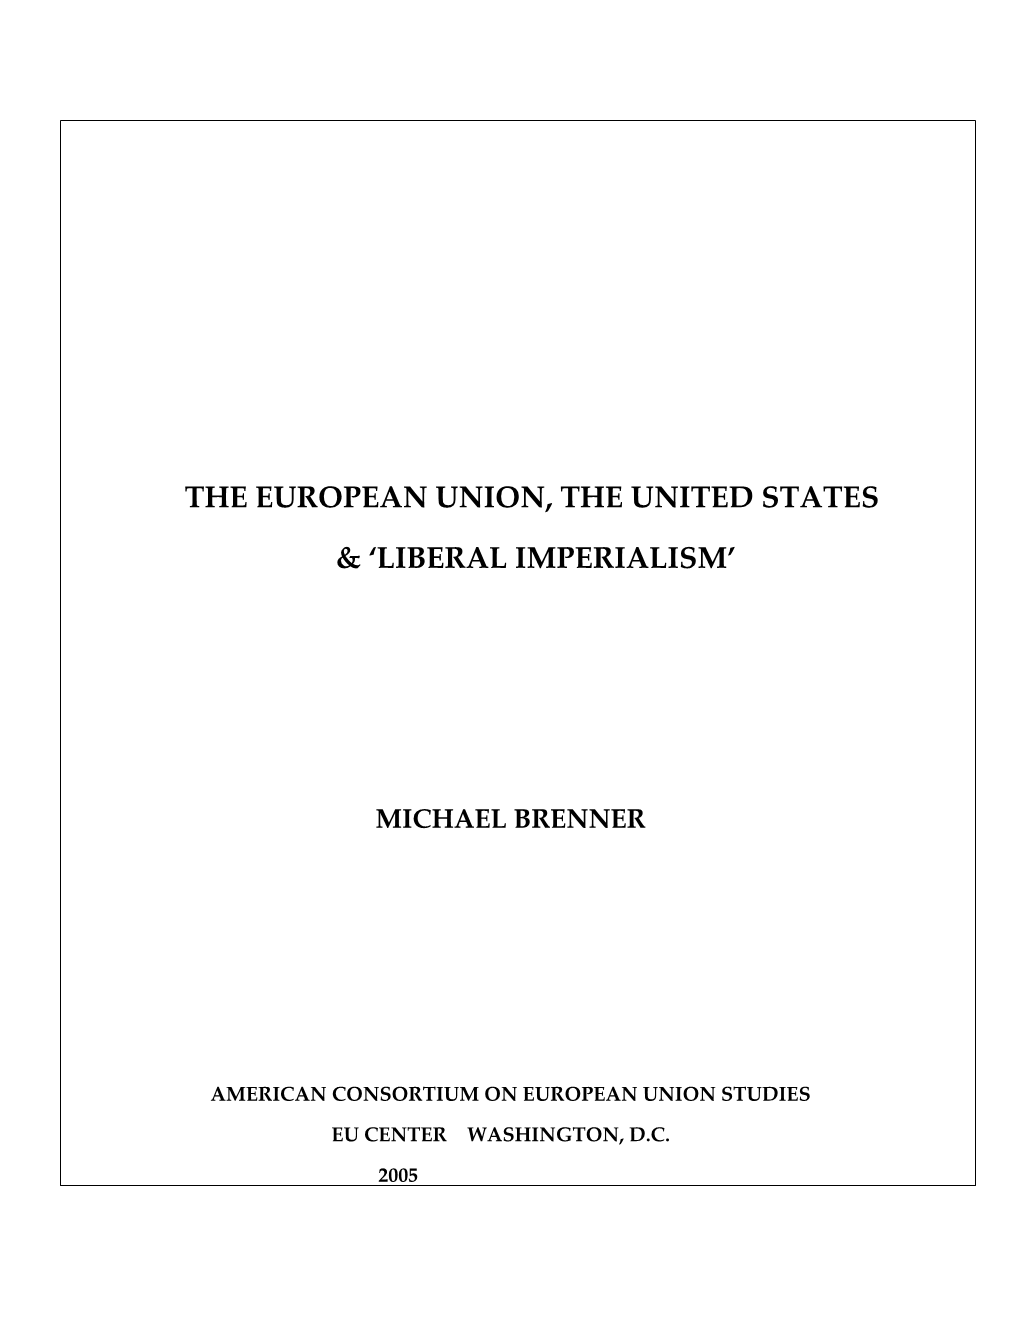 The European Union, the United States